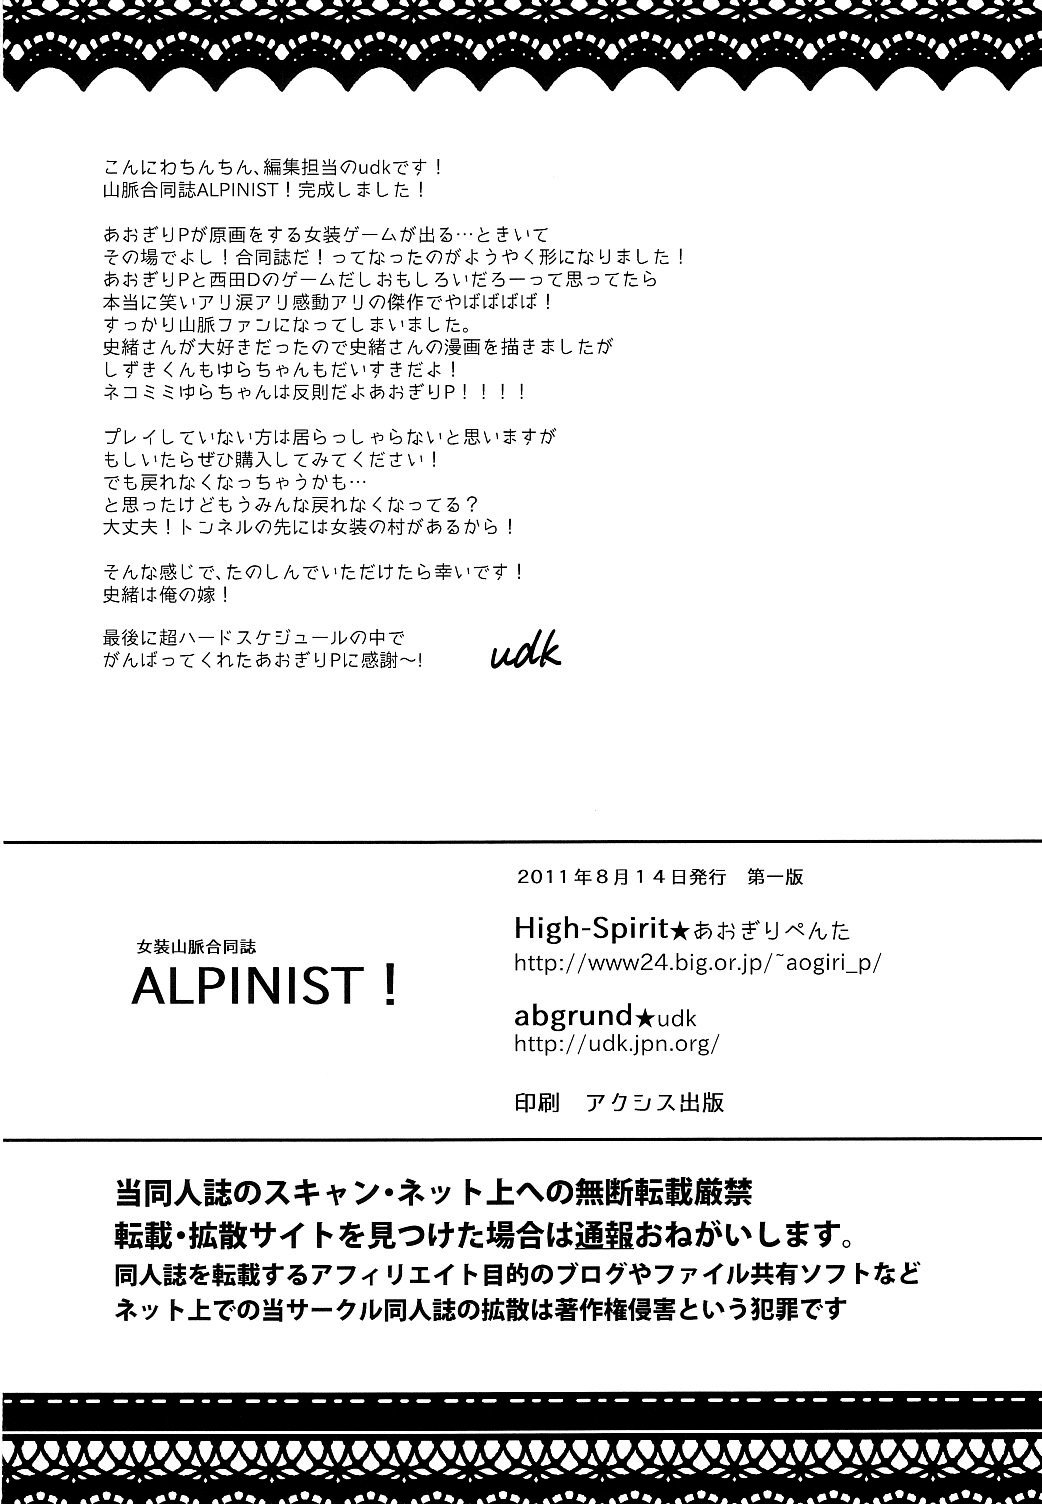 ALPINIST! - 34